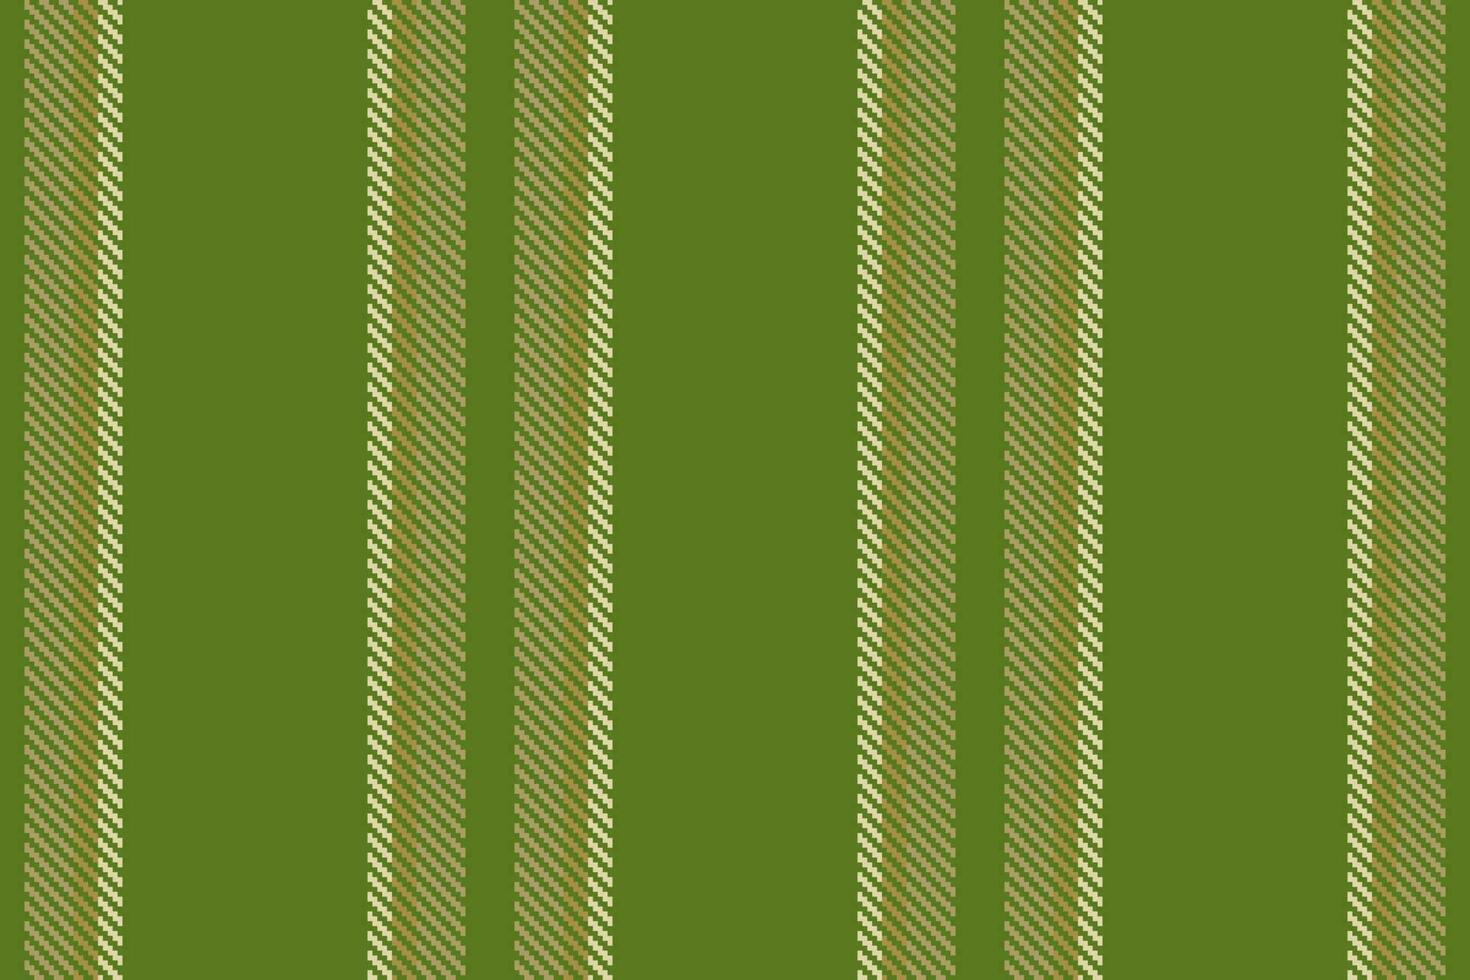 vertikal sömlös textur. textil- tyg mönster. bakgrund rader rand vektor. vektor